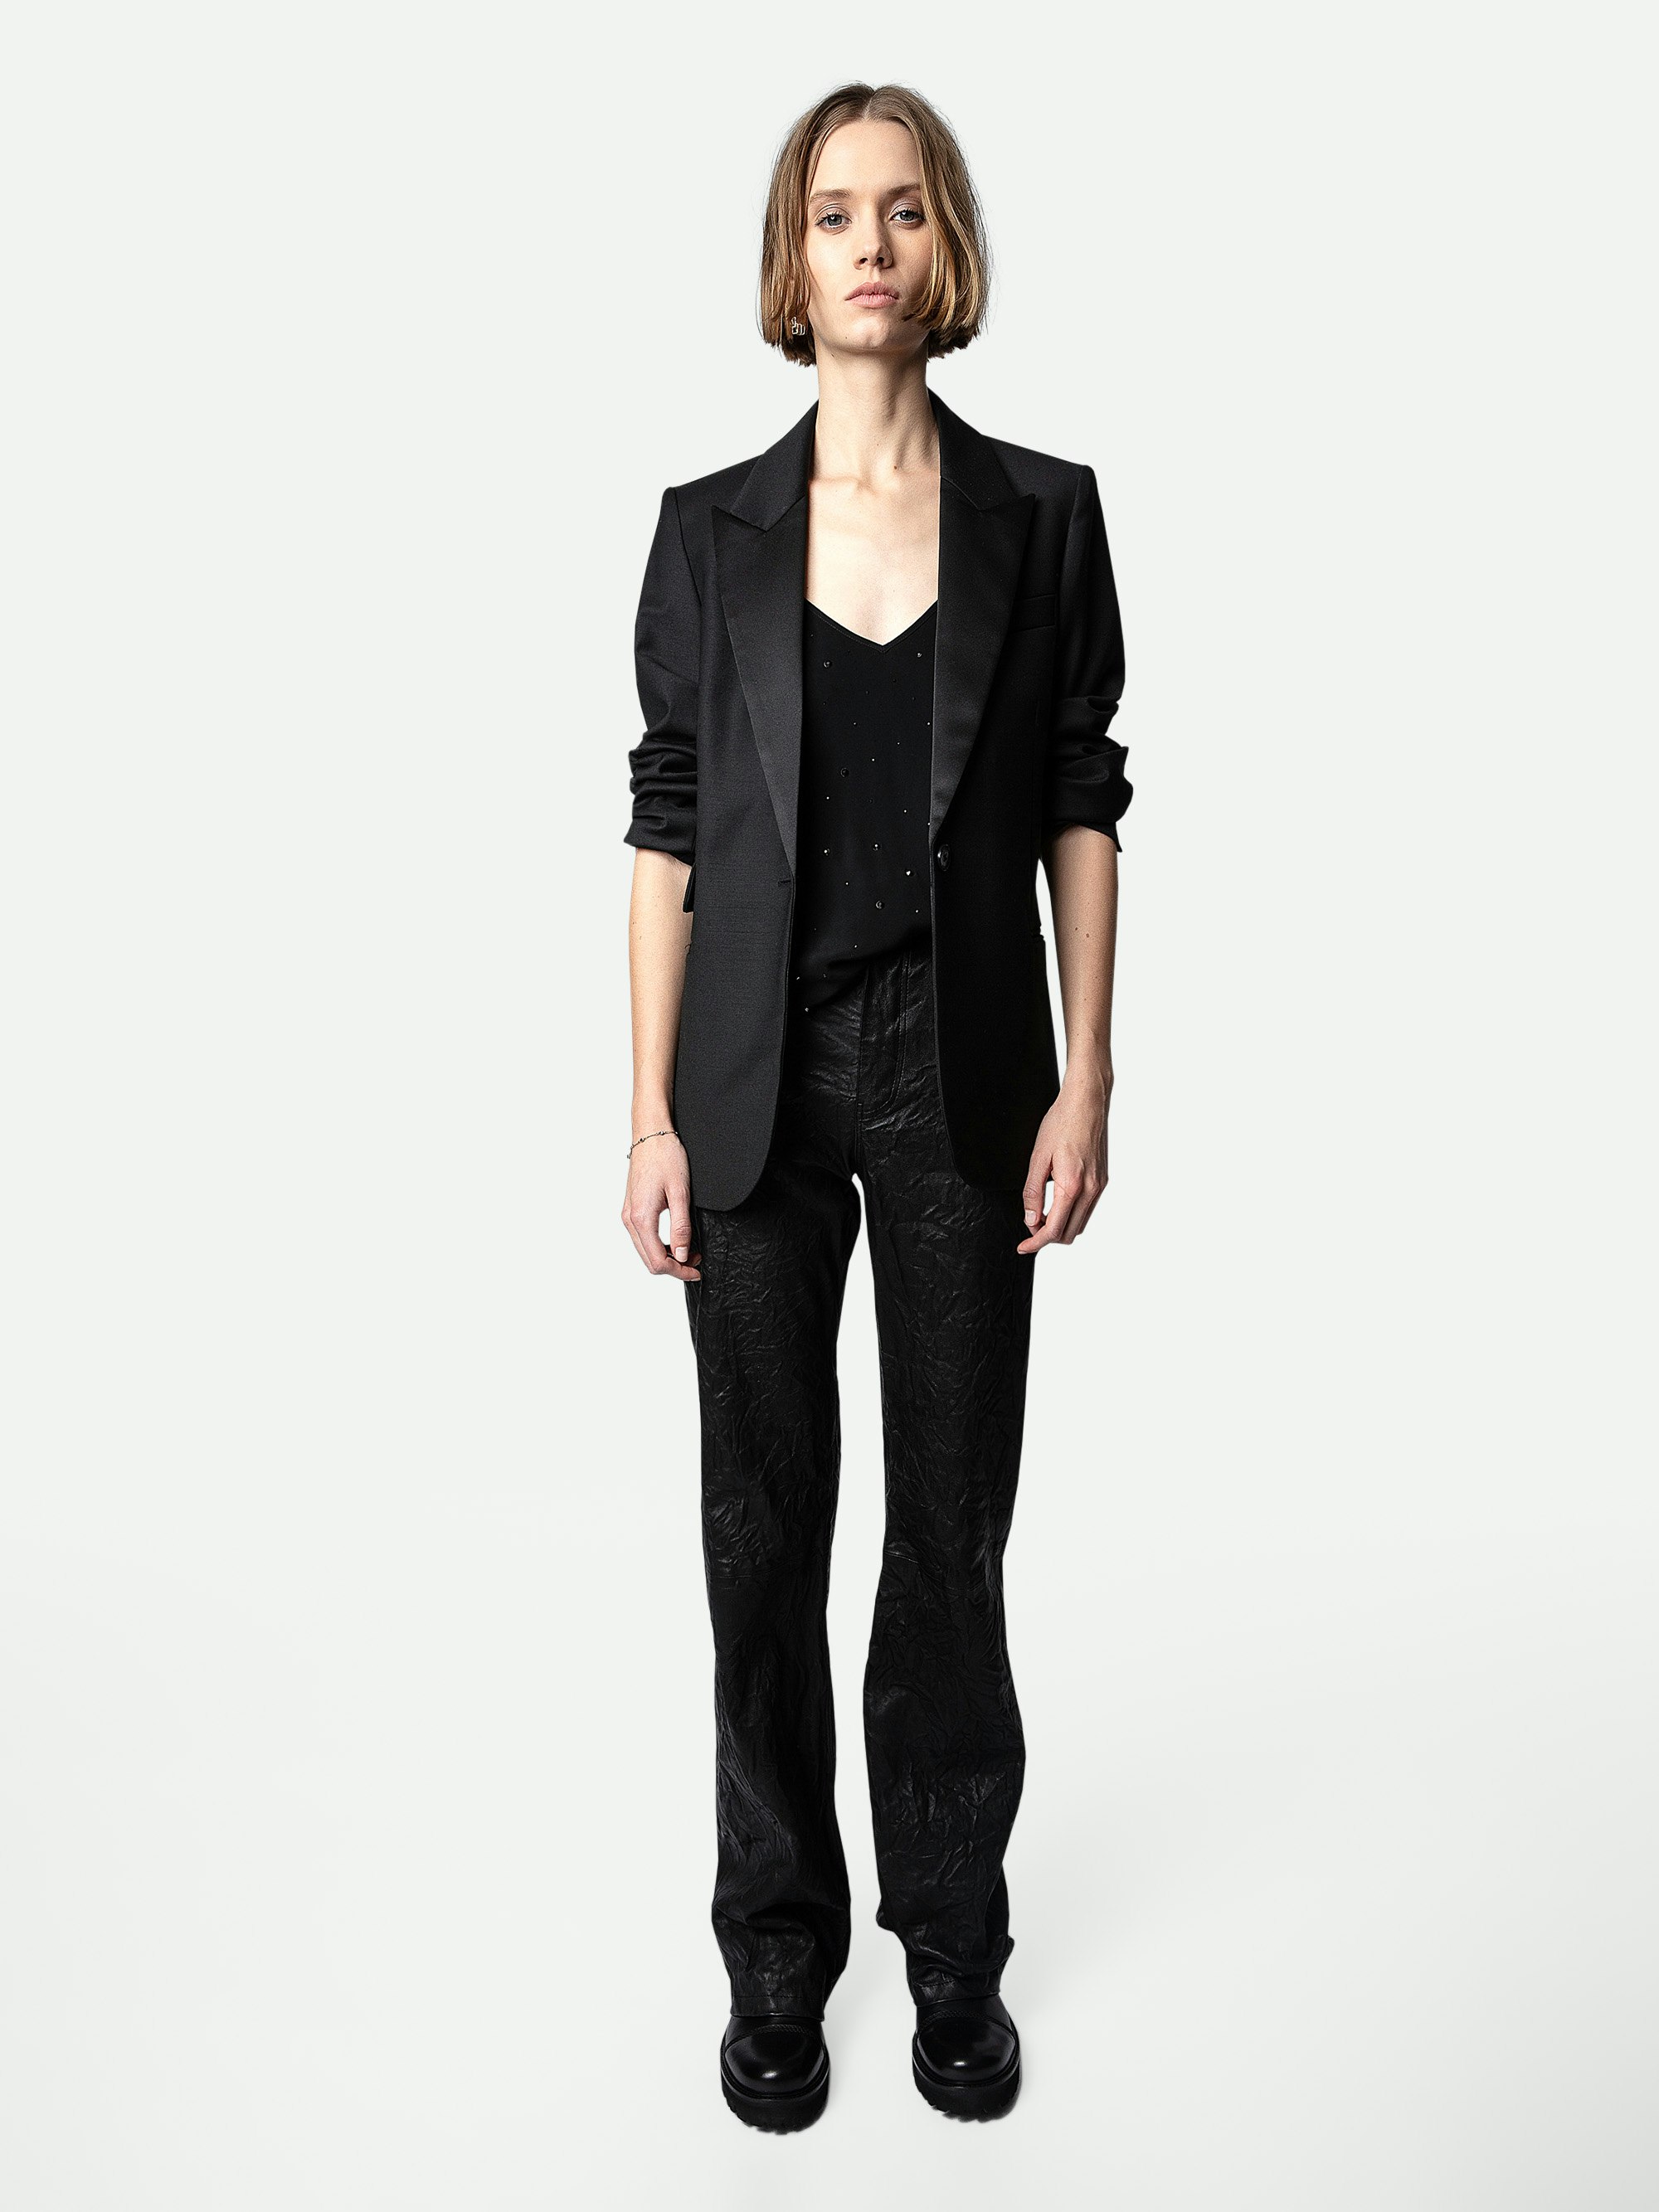 Casel Soft Strass Camisole - Women’s black camisole rhinestone-embellished